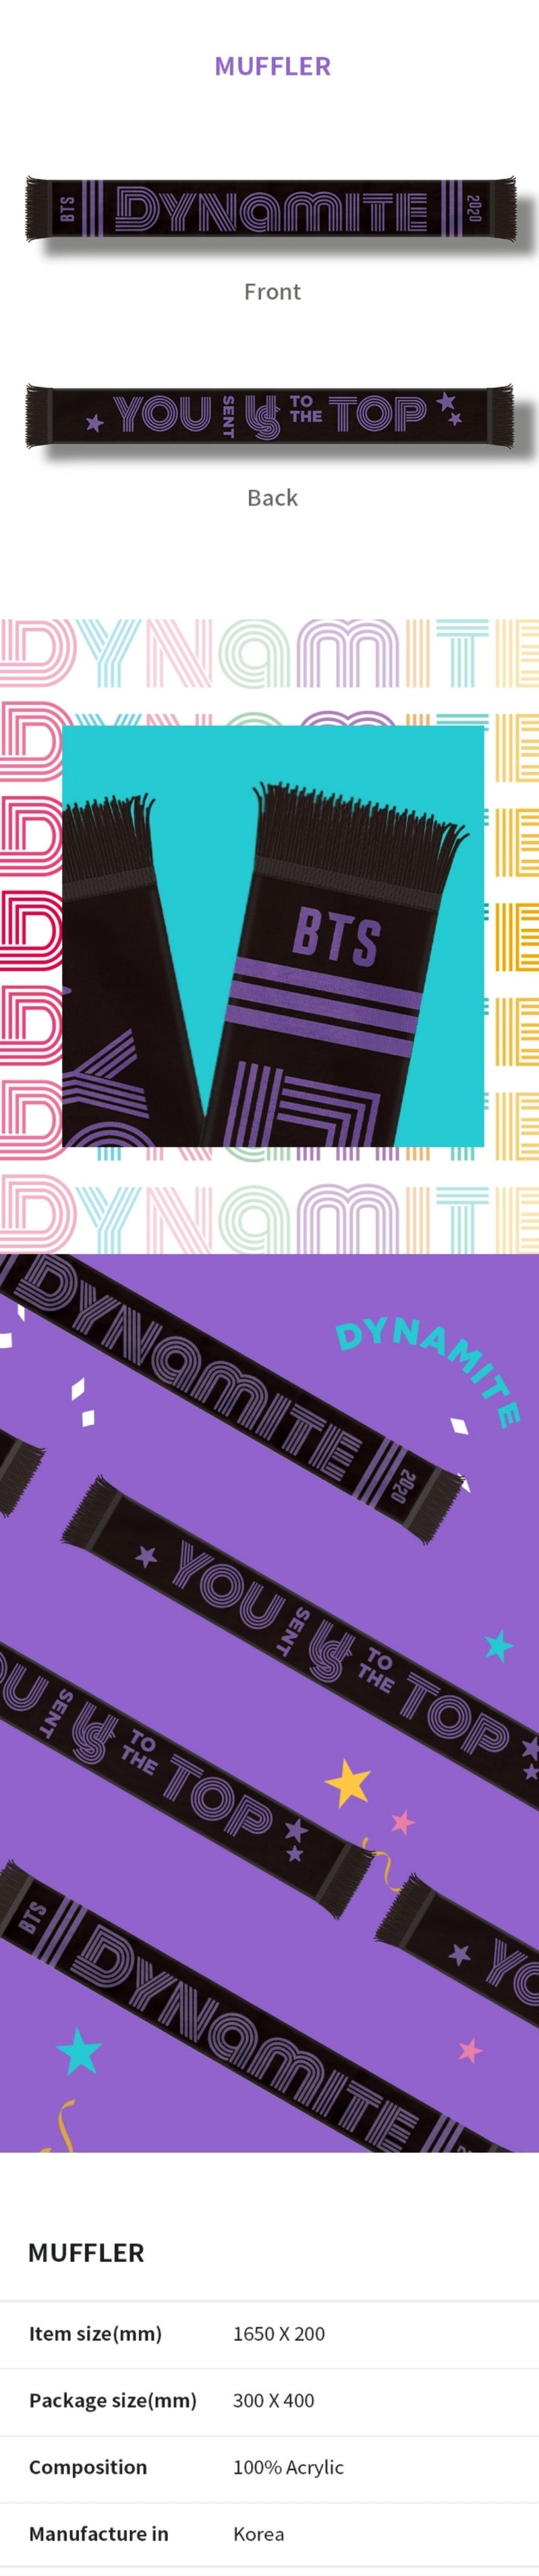 BTS Dynamite Celebration Oficial Merchandise - Muffler 01